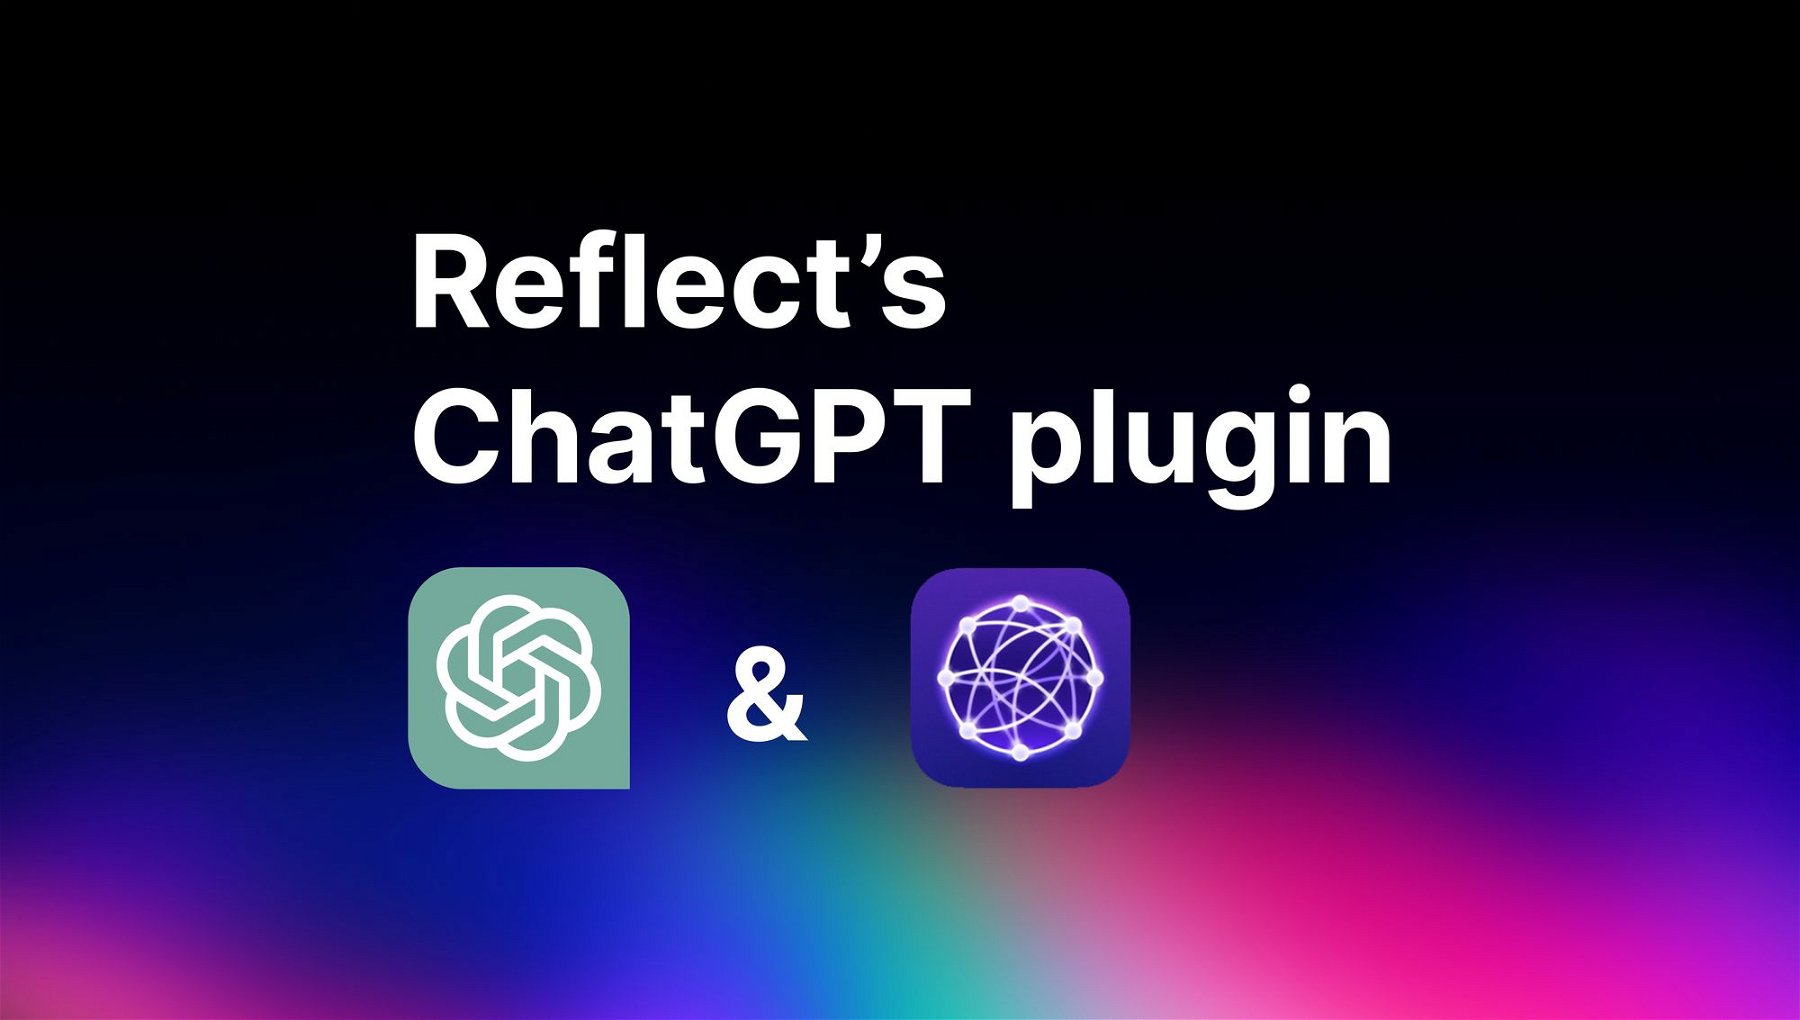 Reflect’s new ChatGPT plugin 